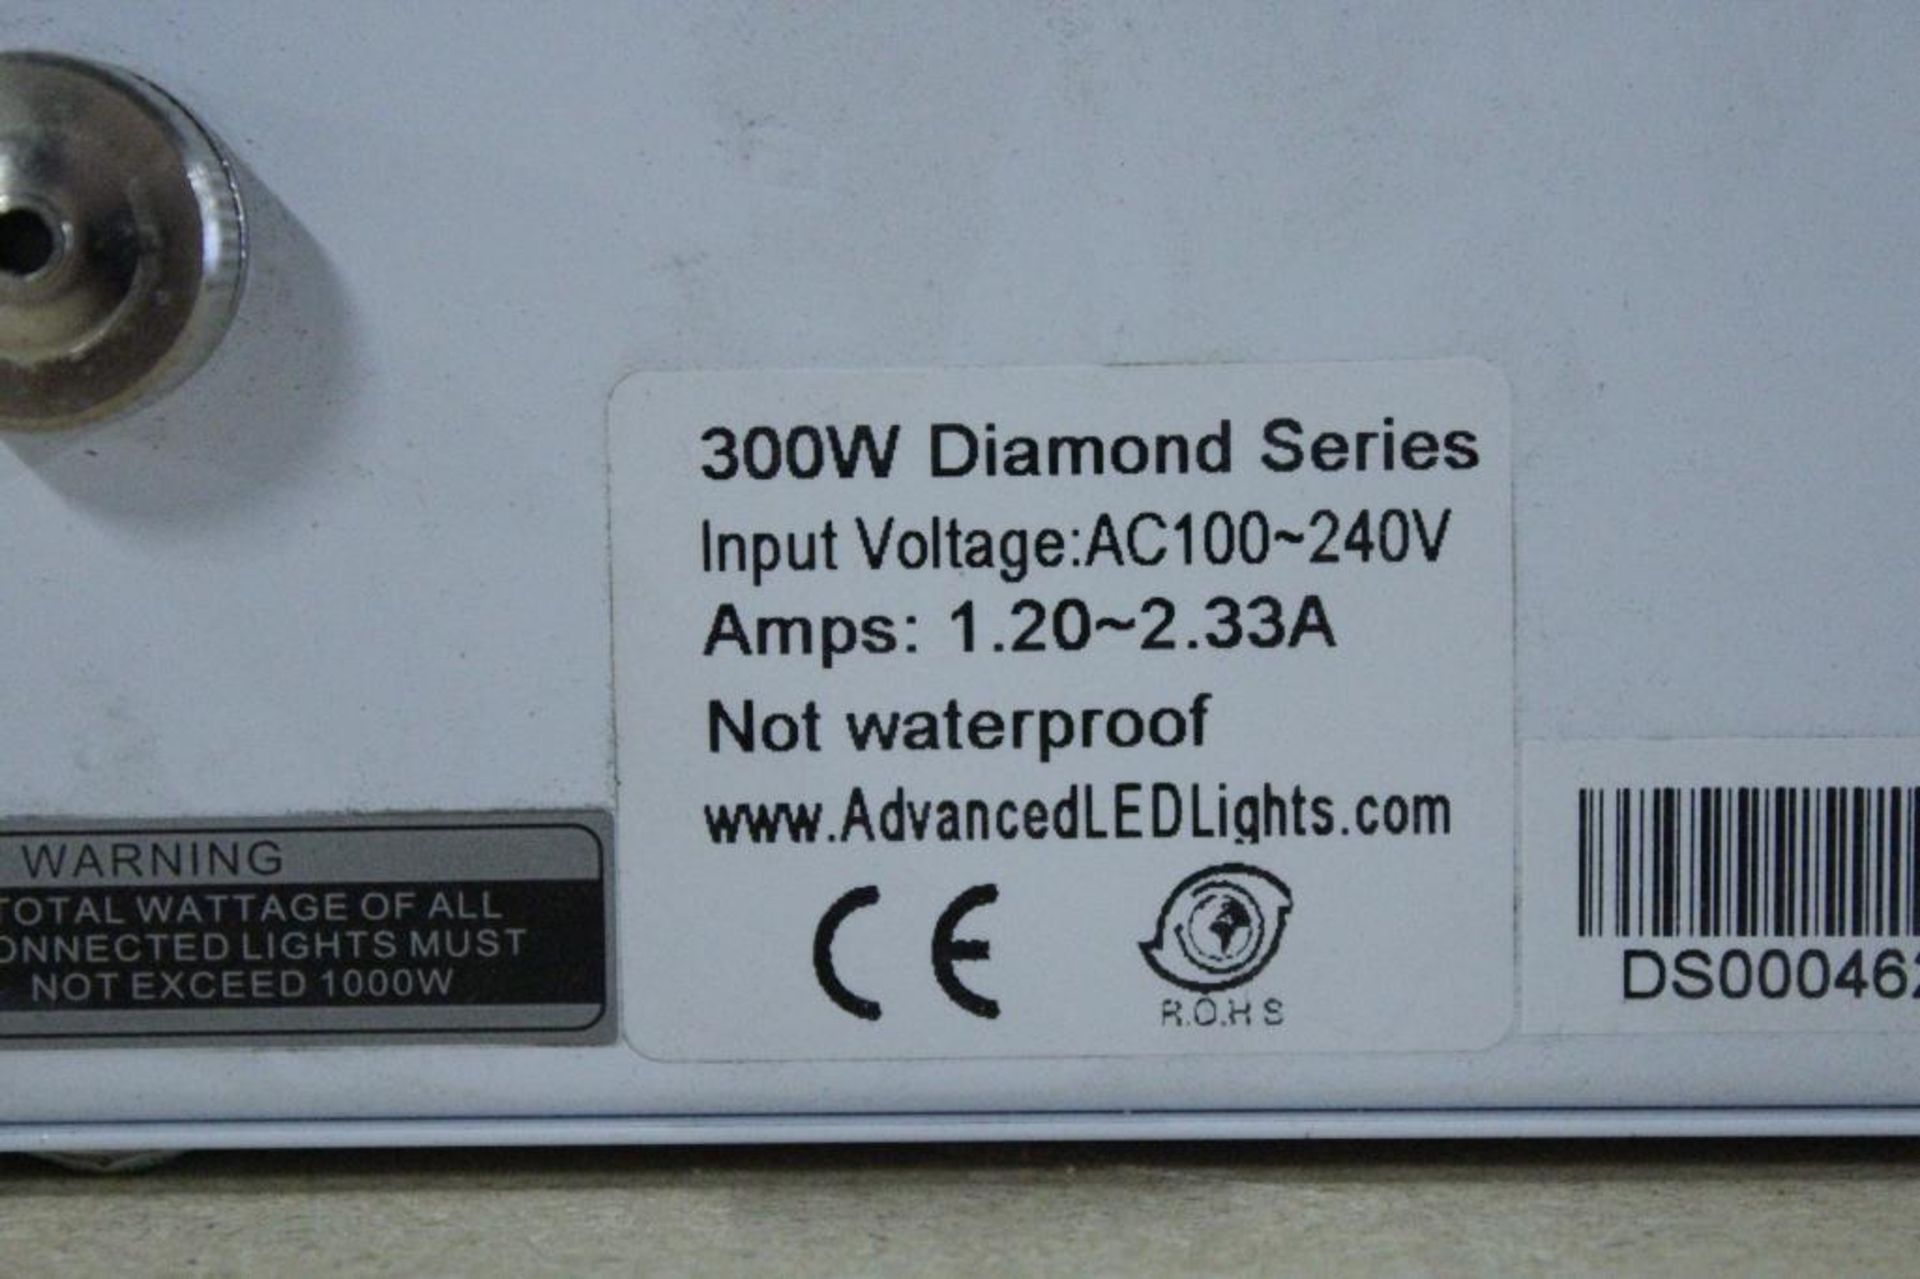 Advanced led lights diamond series 300w LED grow light - Image 2 of 3